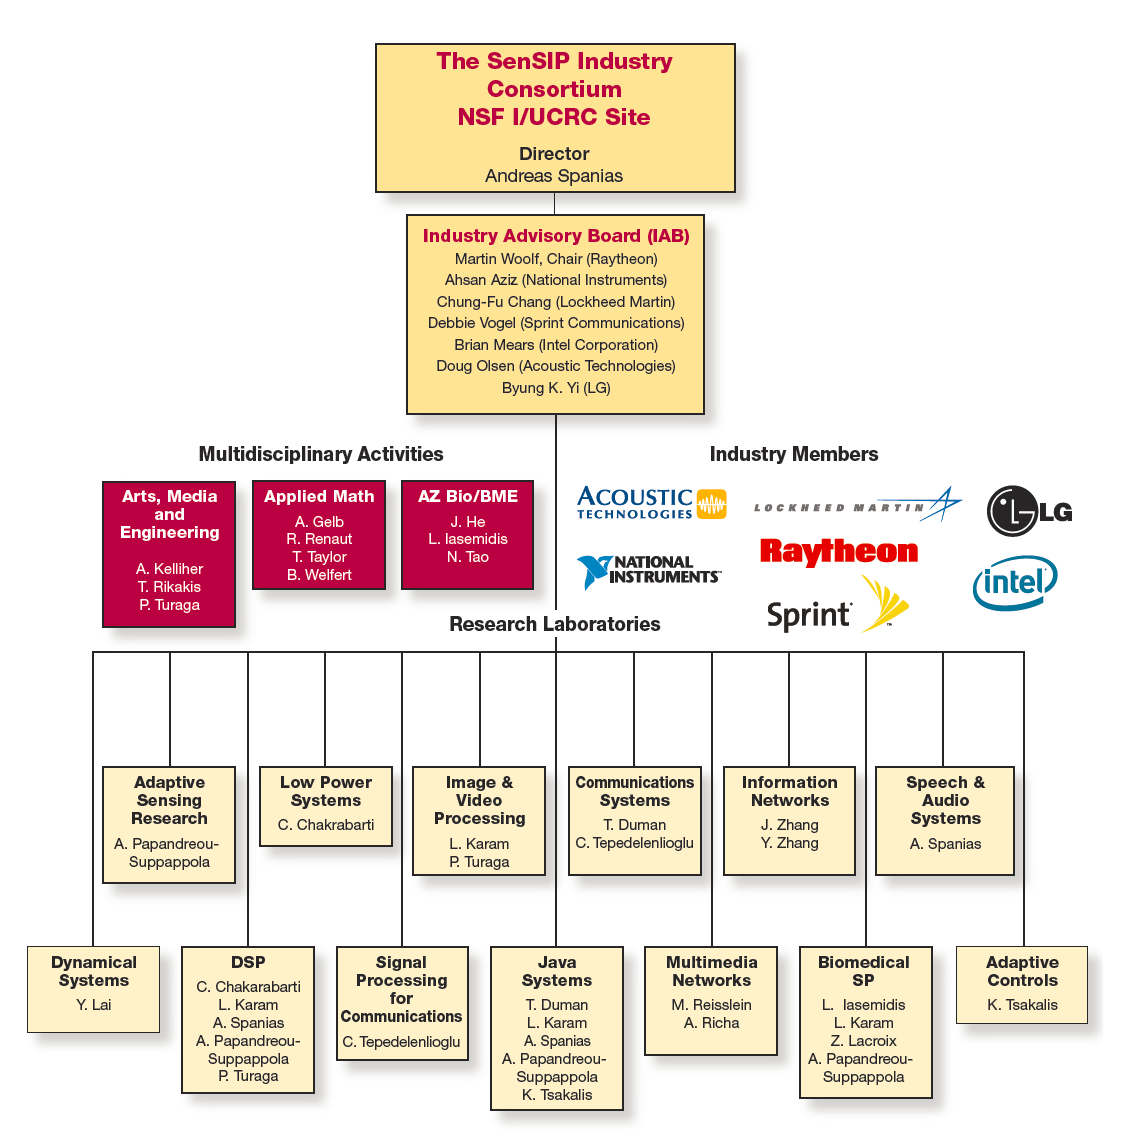 Intel Org Chart